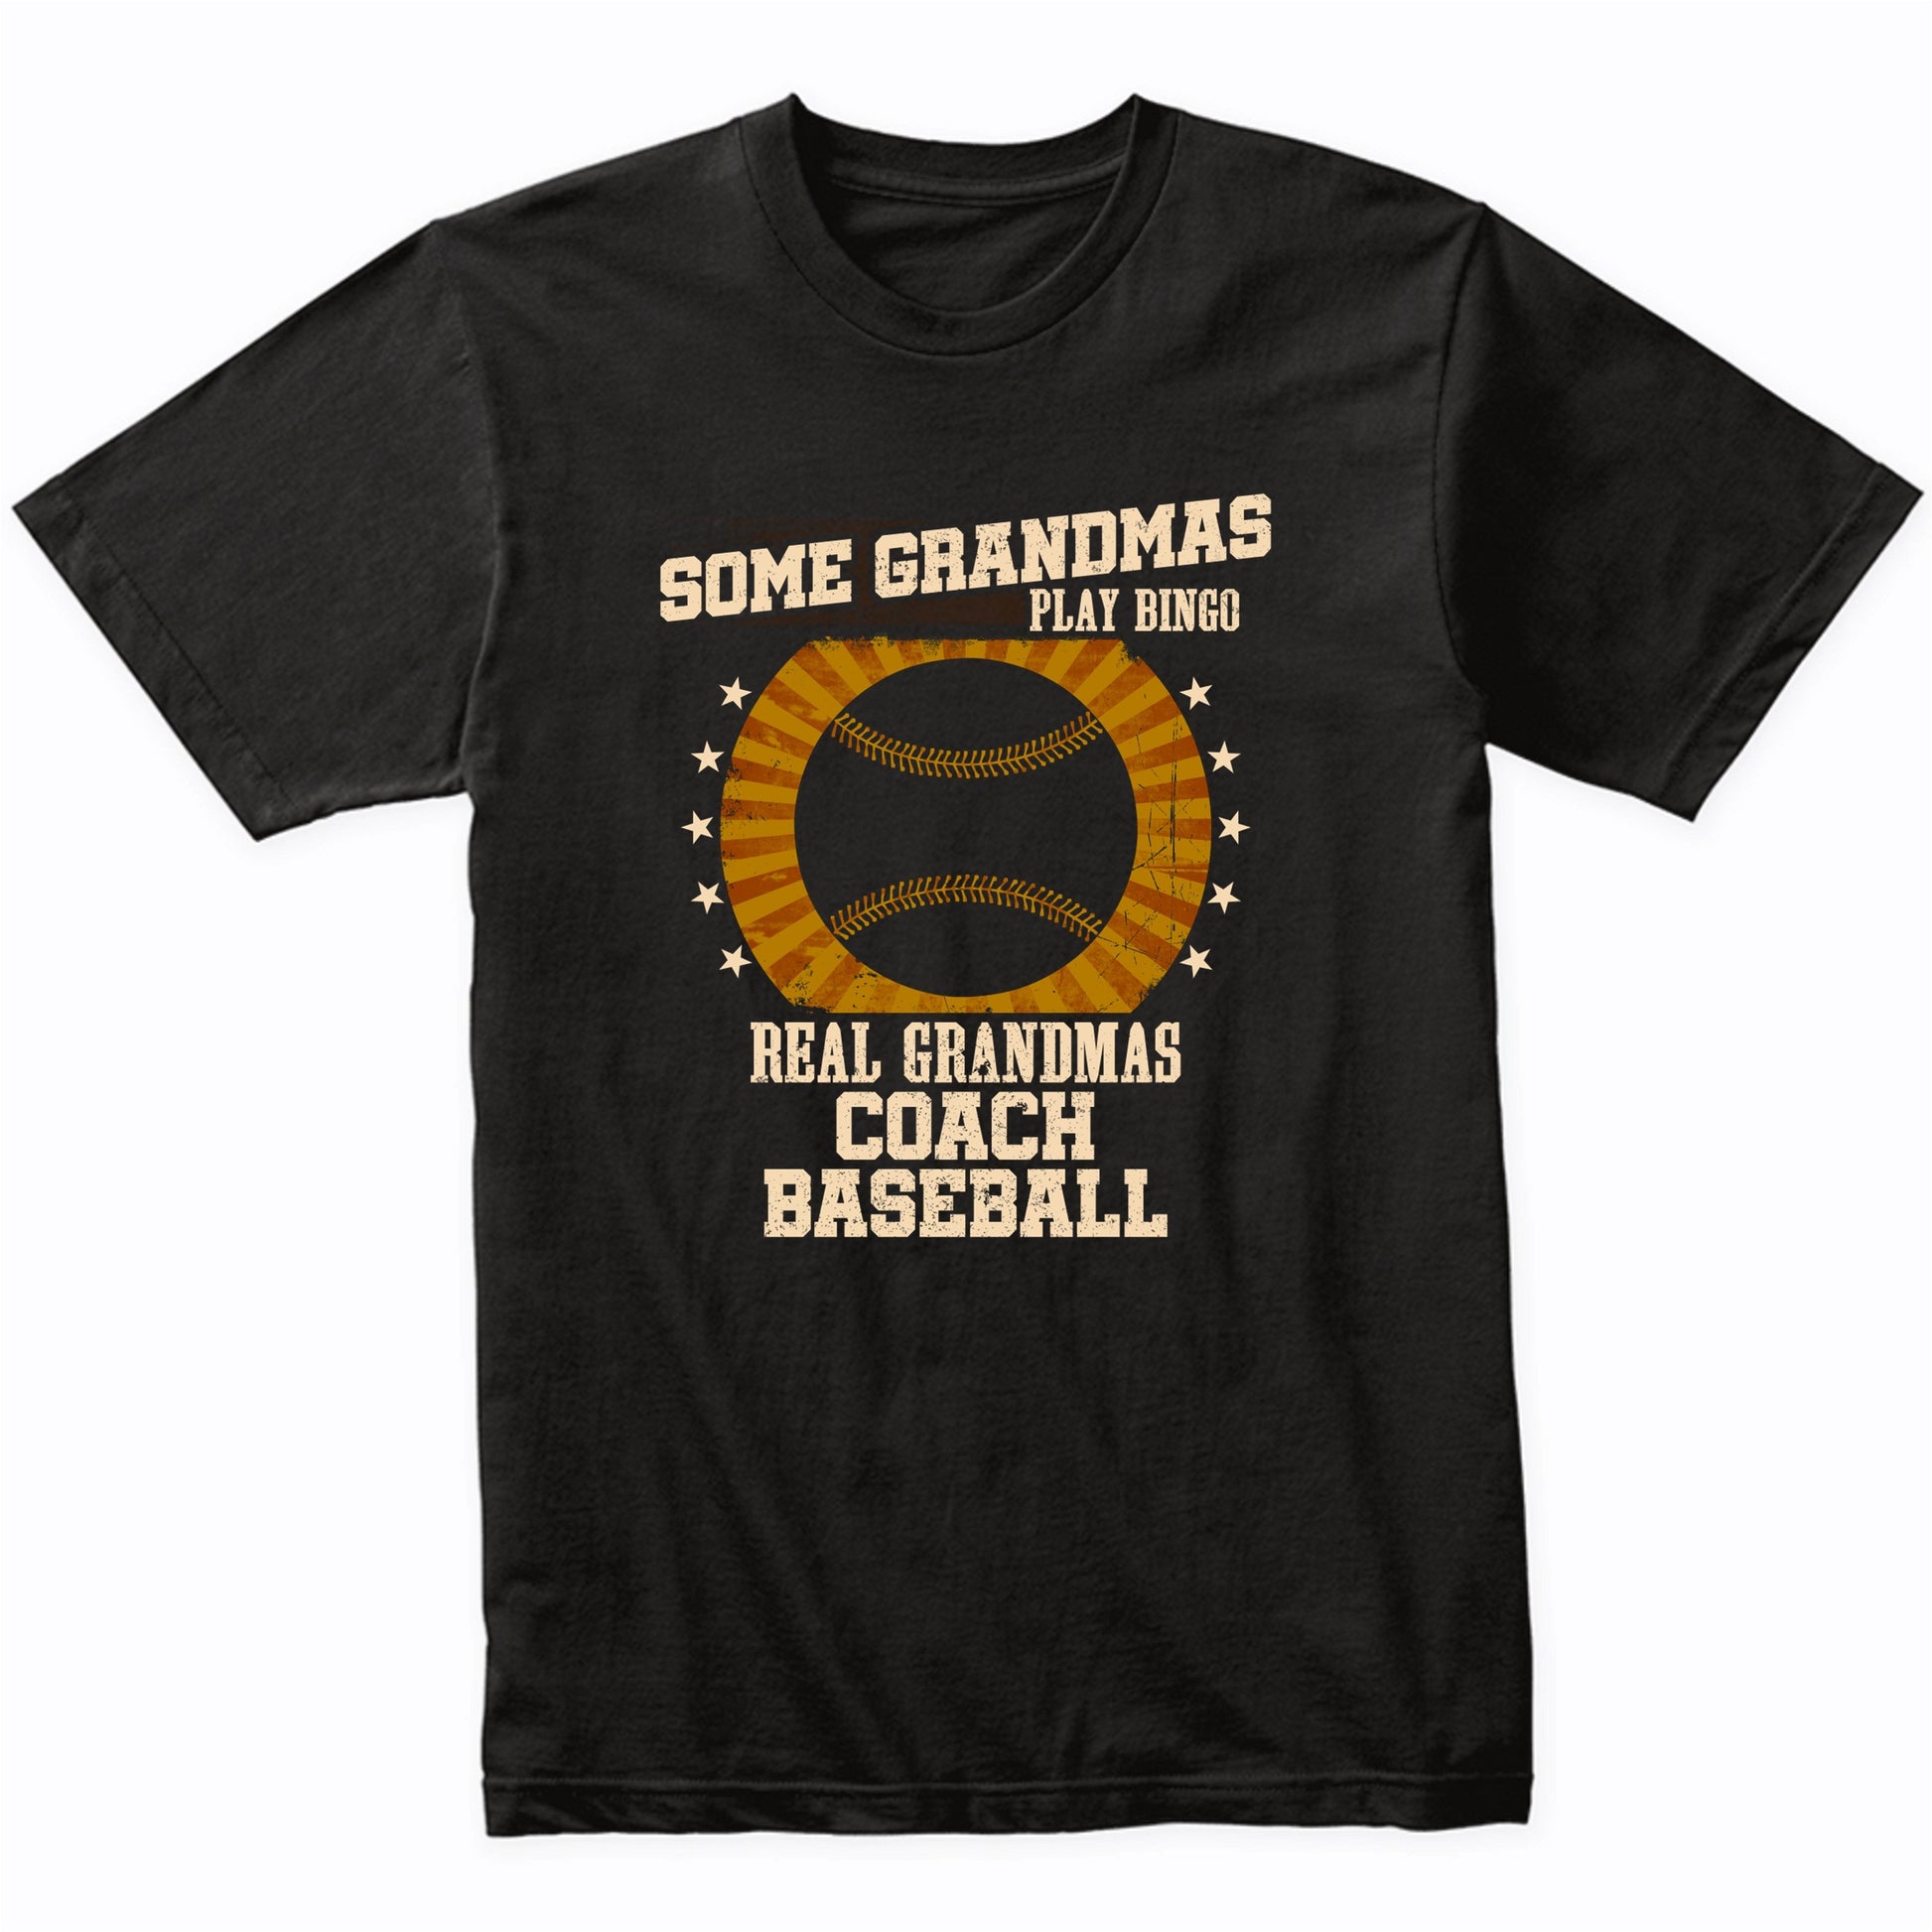 Baseball Grandma Shirt - Real Grandmas Coach Baseball T-Shirt